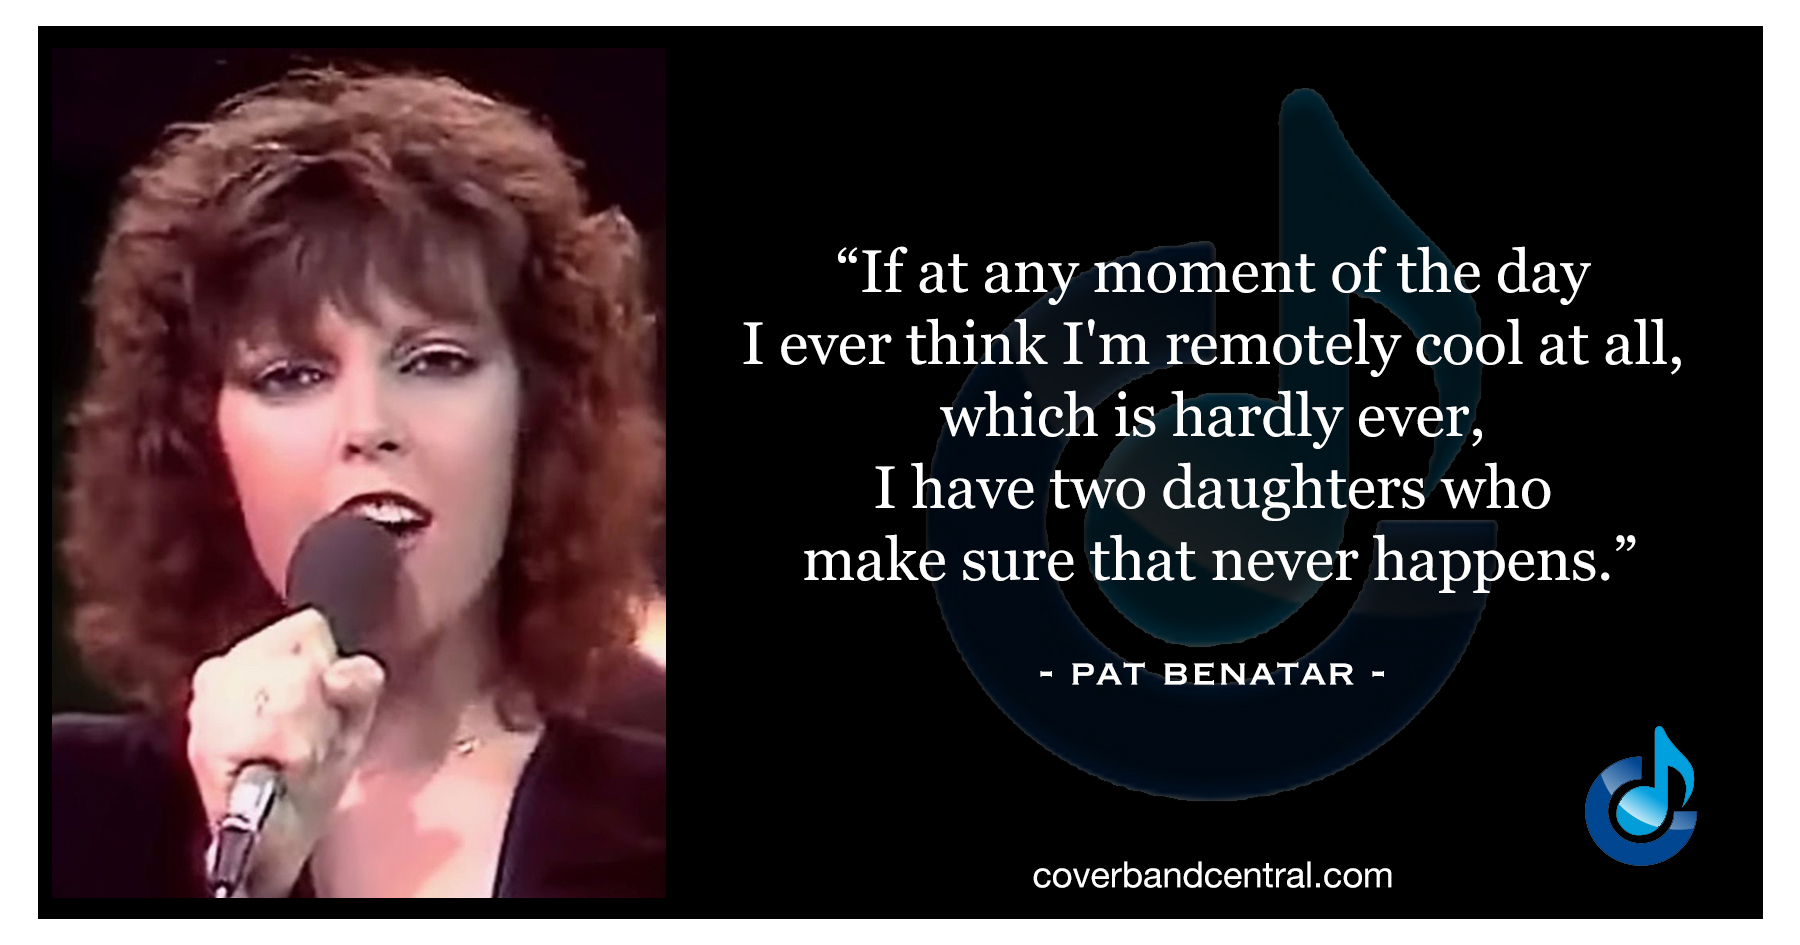 Pat Benatar quote